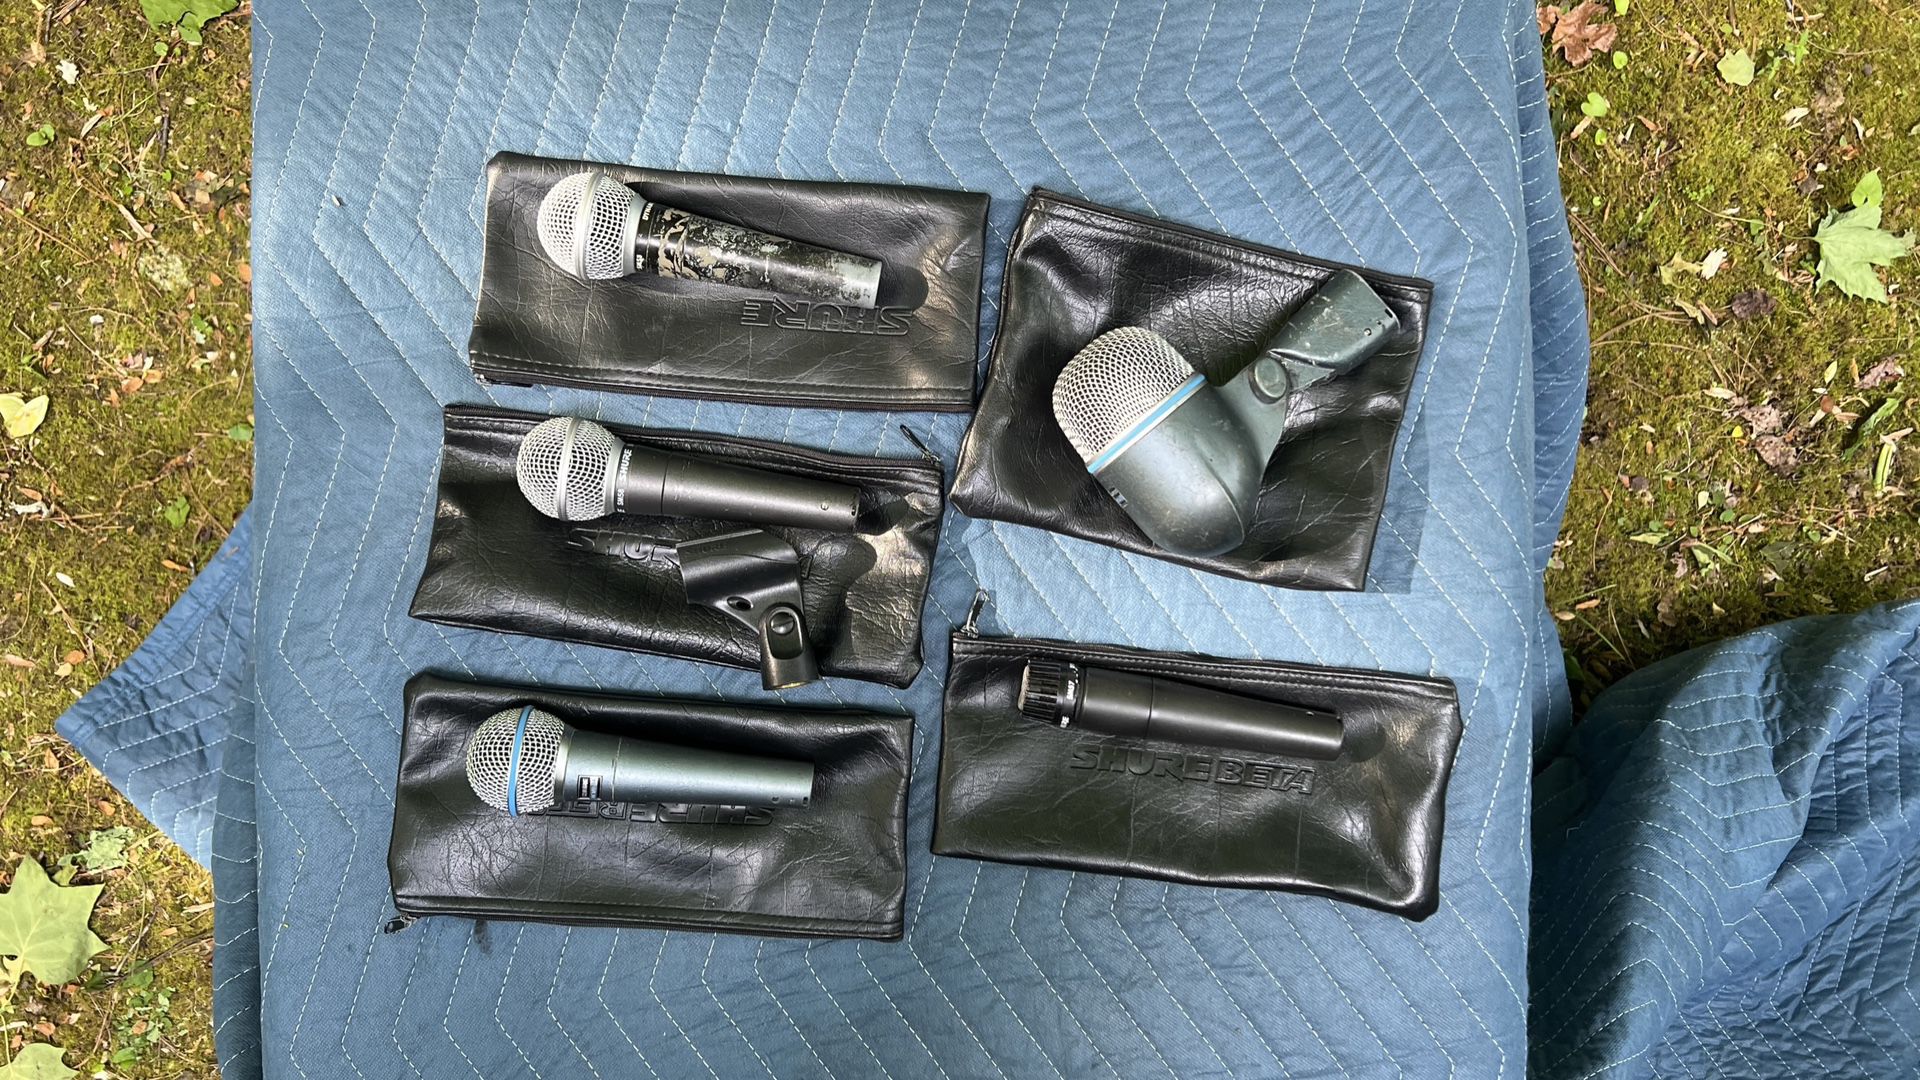 SHURE Microphone LOT - SM58s, SM 57, Beta 58, Beta 52